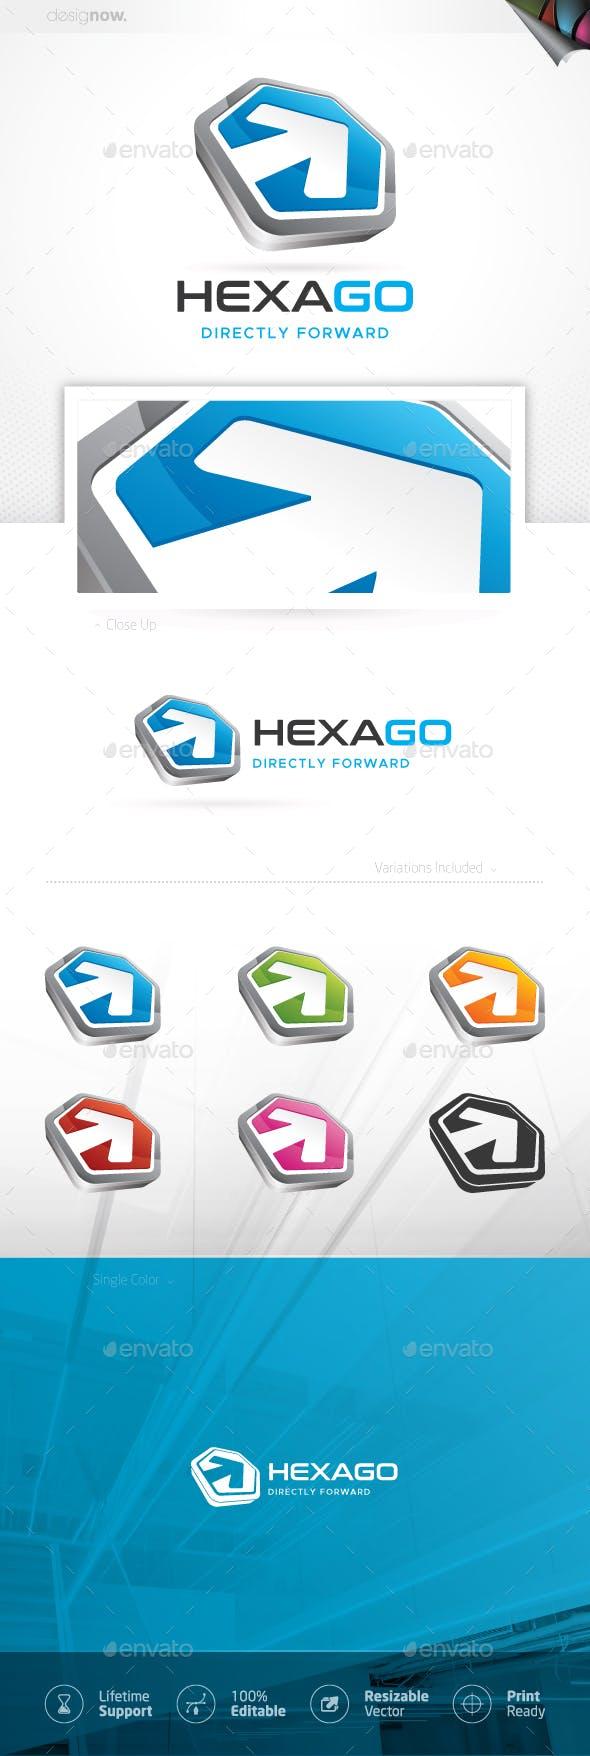 Forward Arrow Logo - Hexagon Arrow Logo by magikpoink | GraphicRiver